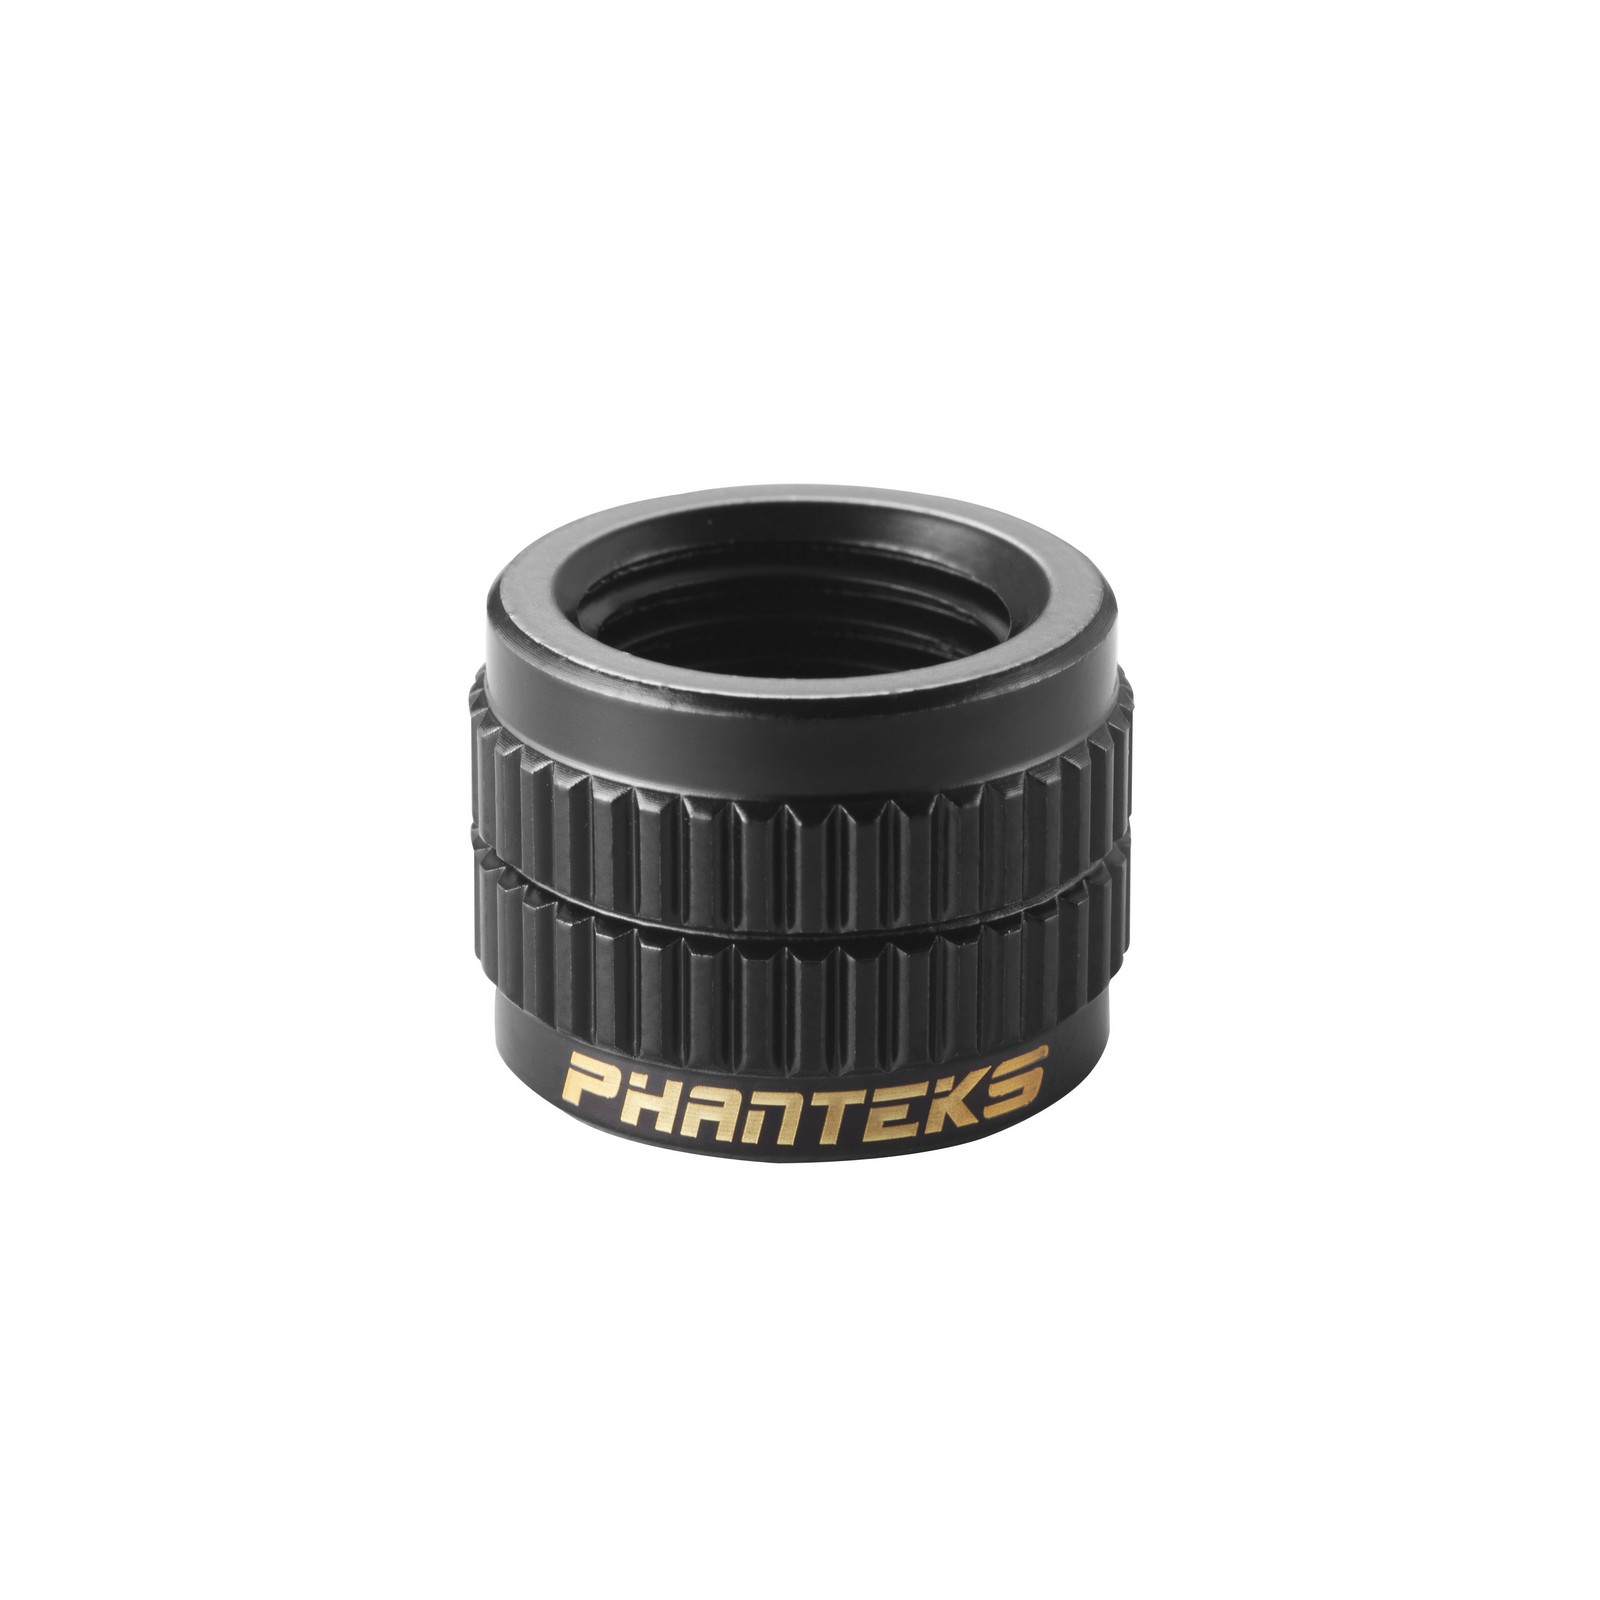 Phanteks - Phanteks F-F Adapter G1/4 - Black